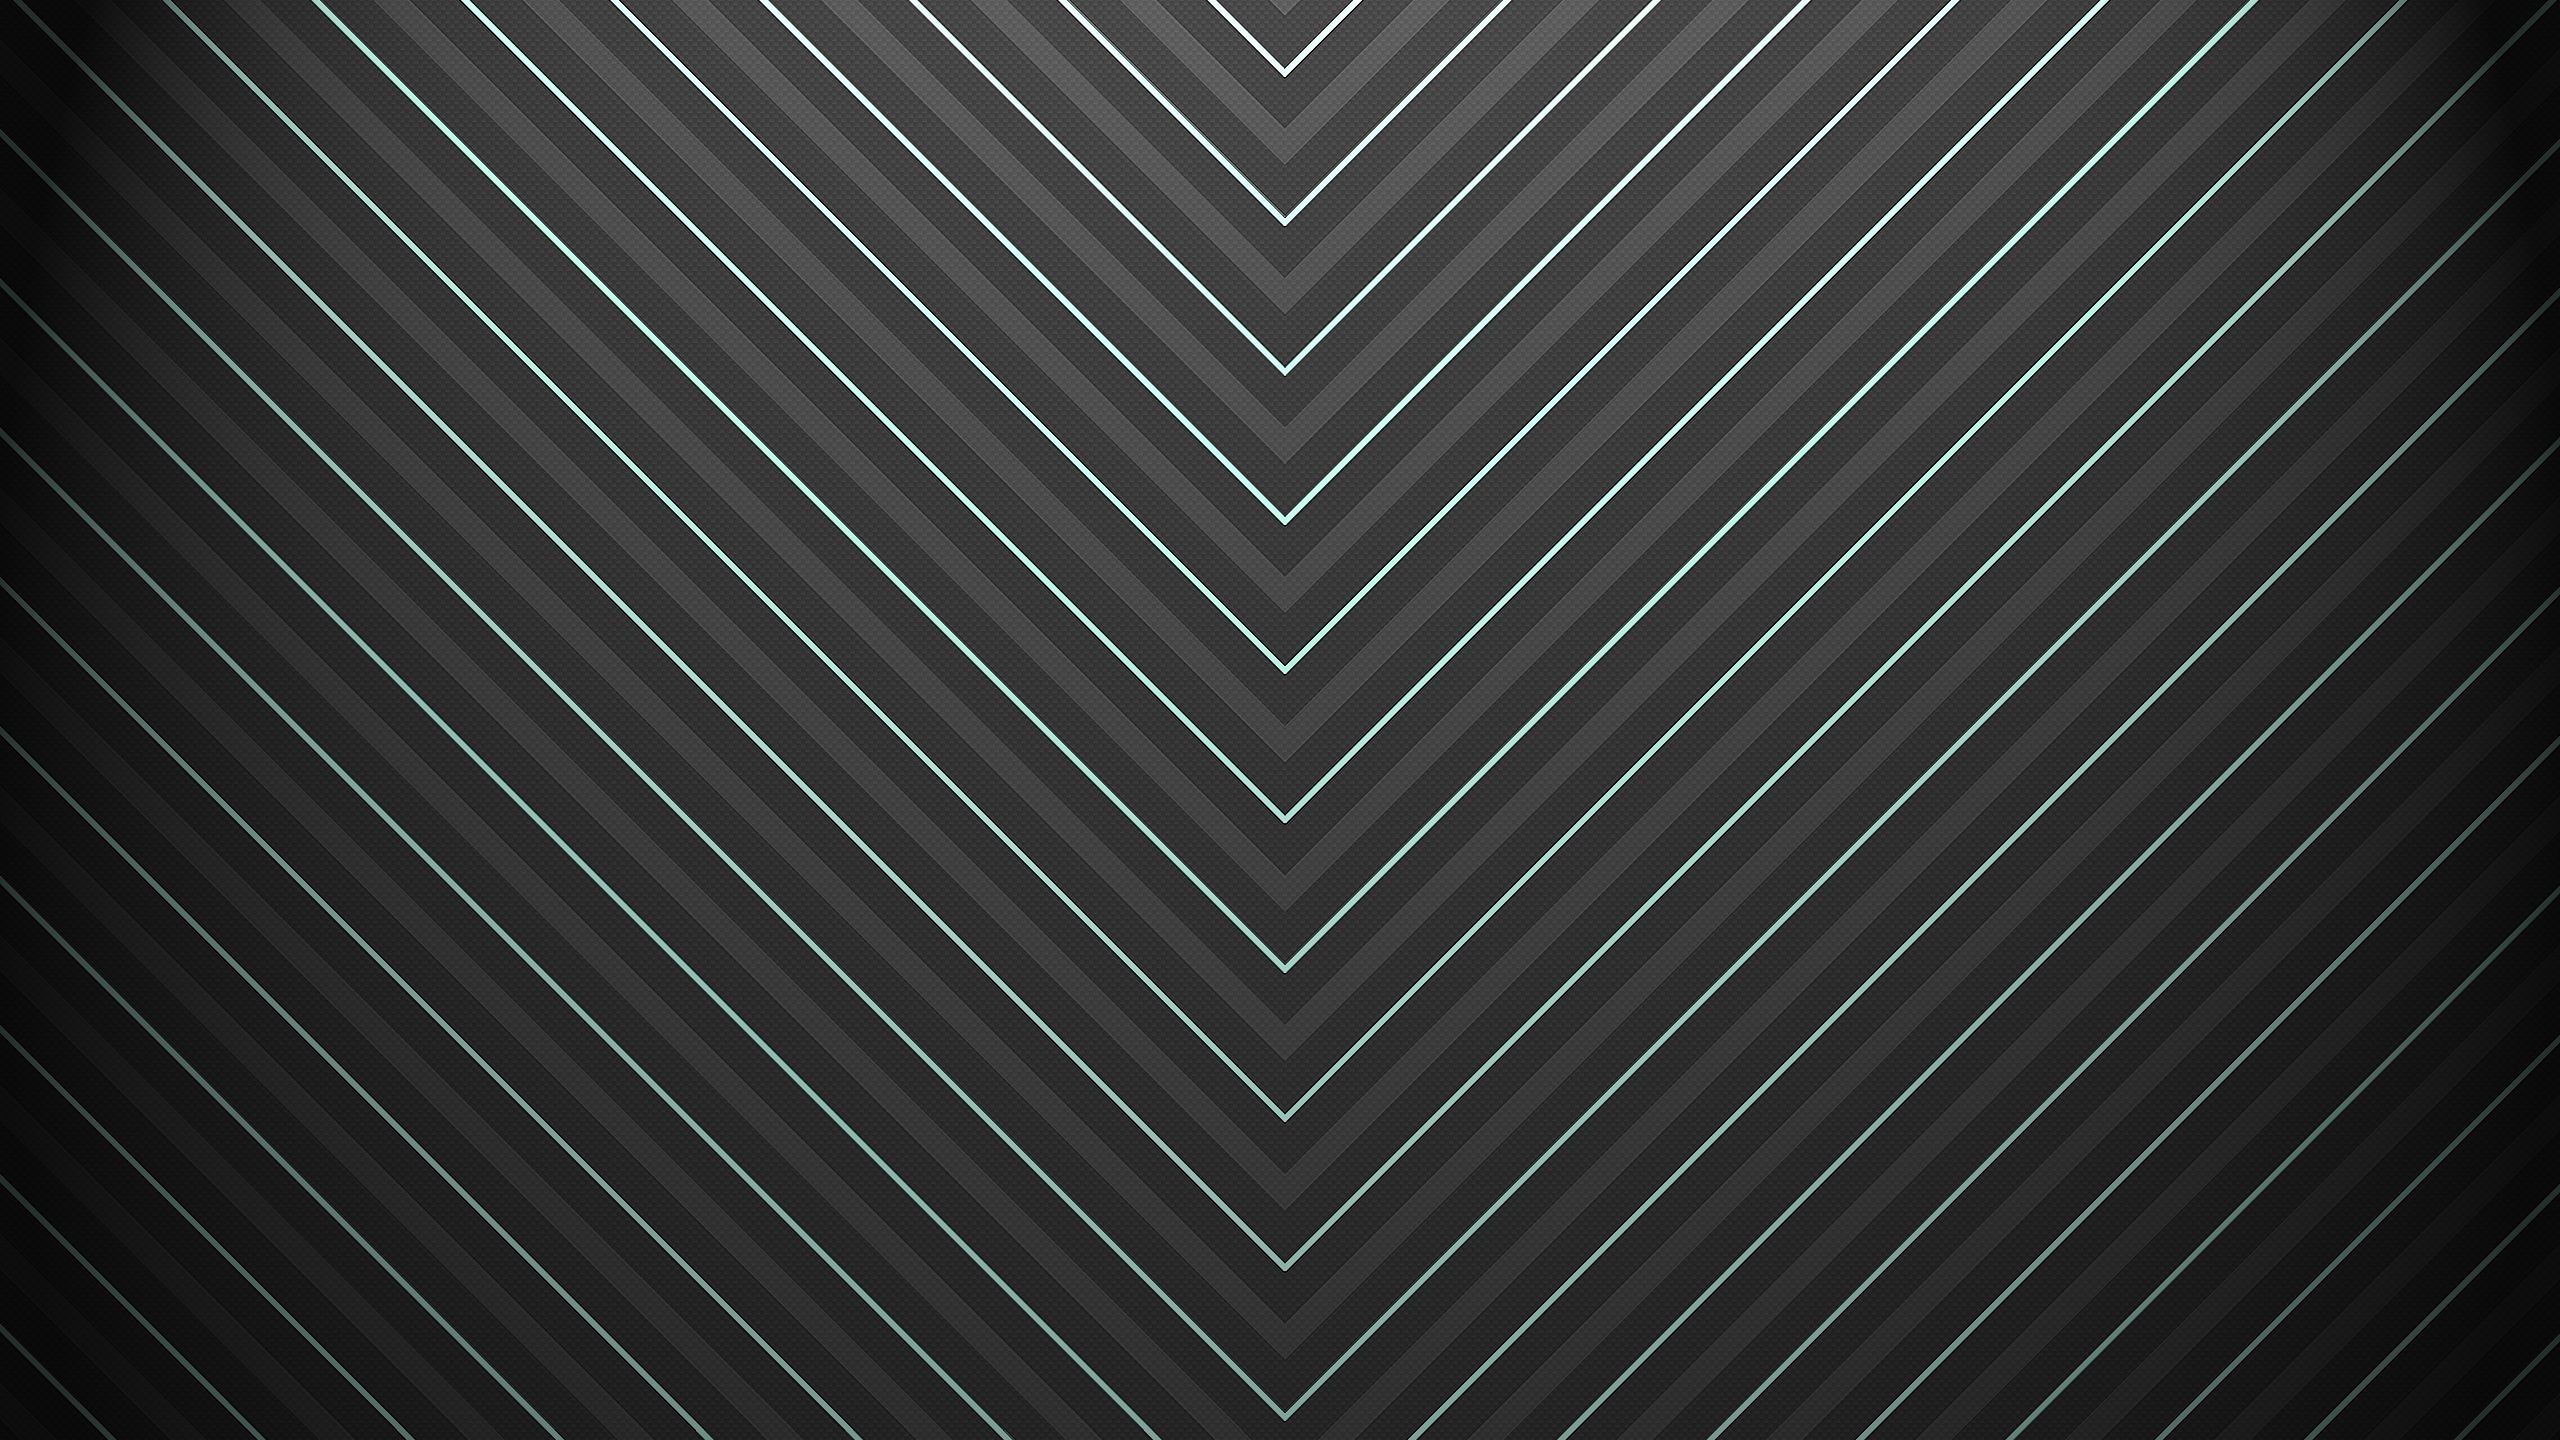 Cool Pattern Wallpaper